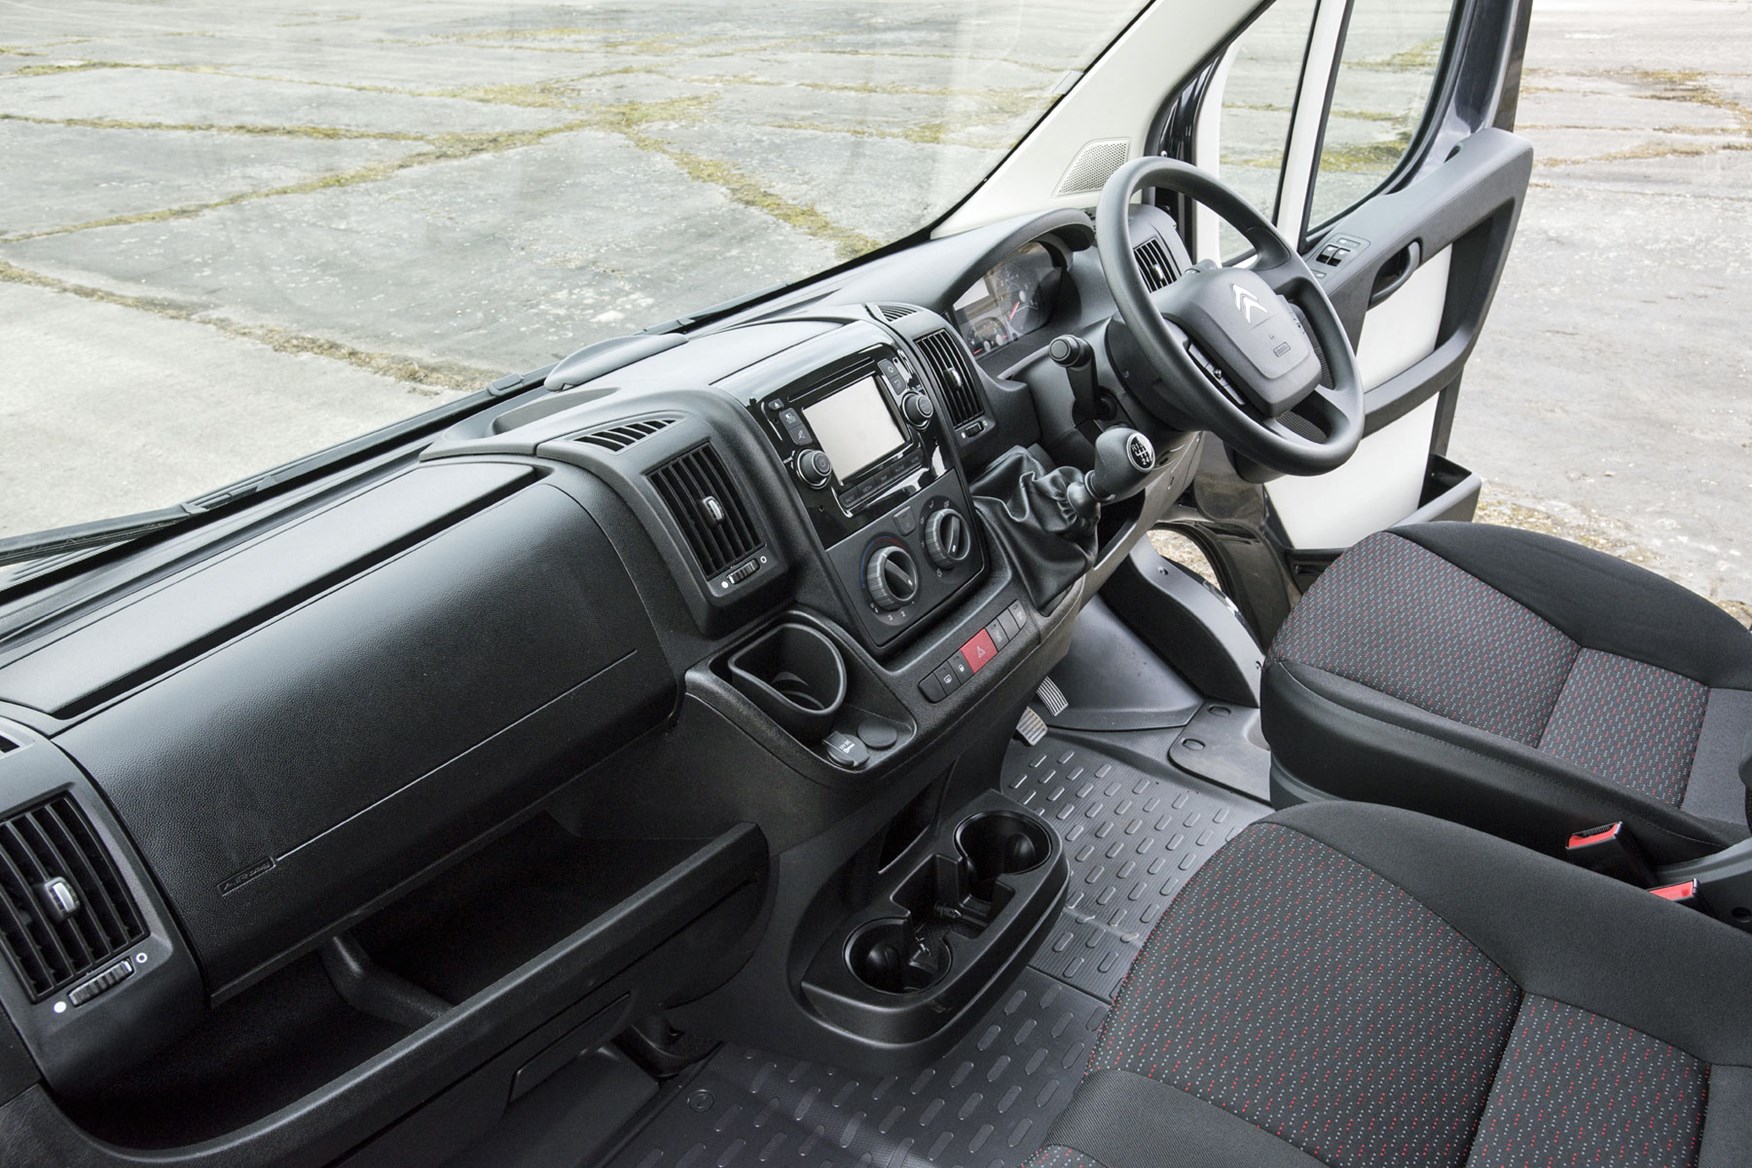 Citroen Relay review - cab interior, dash board, storage